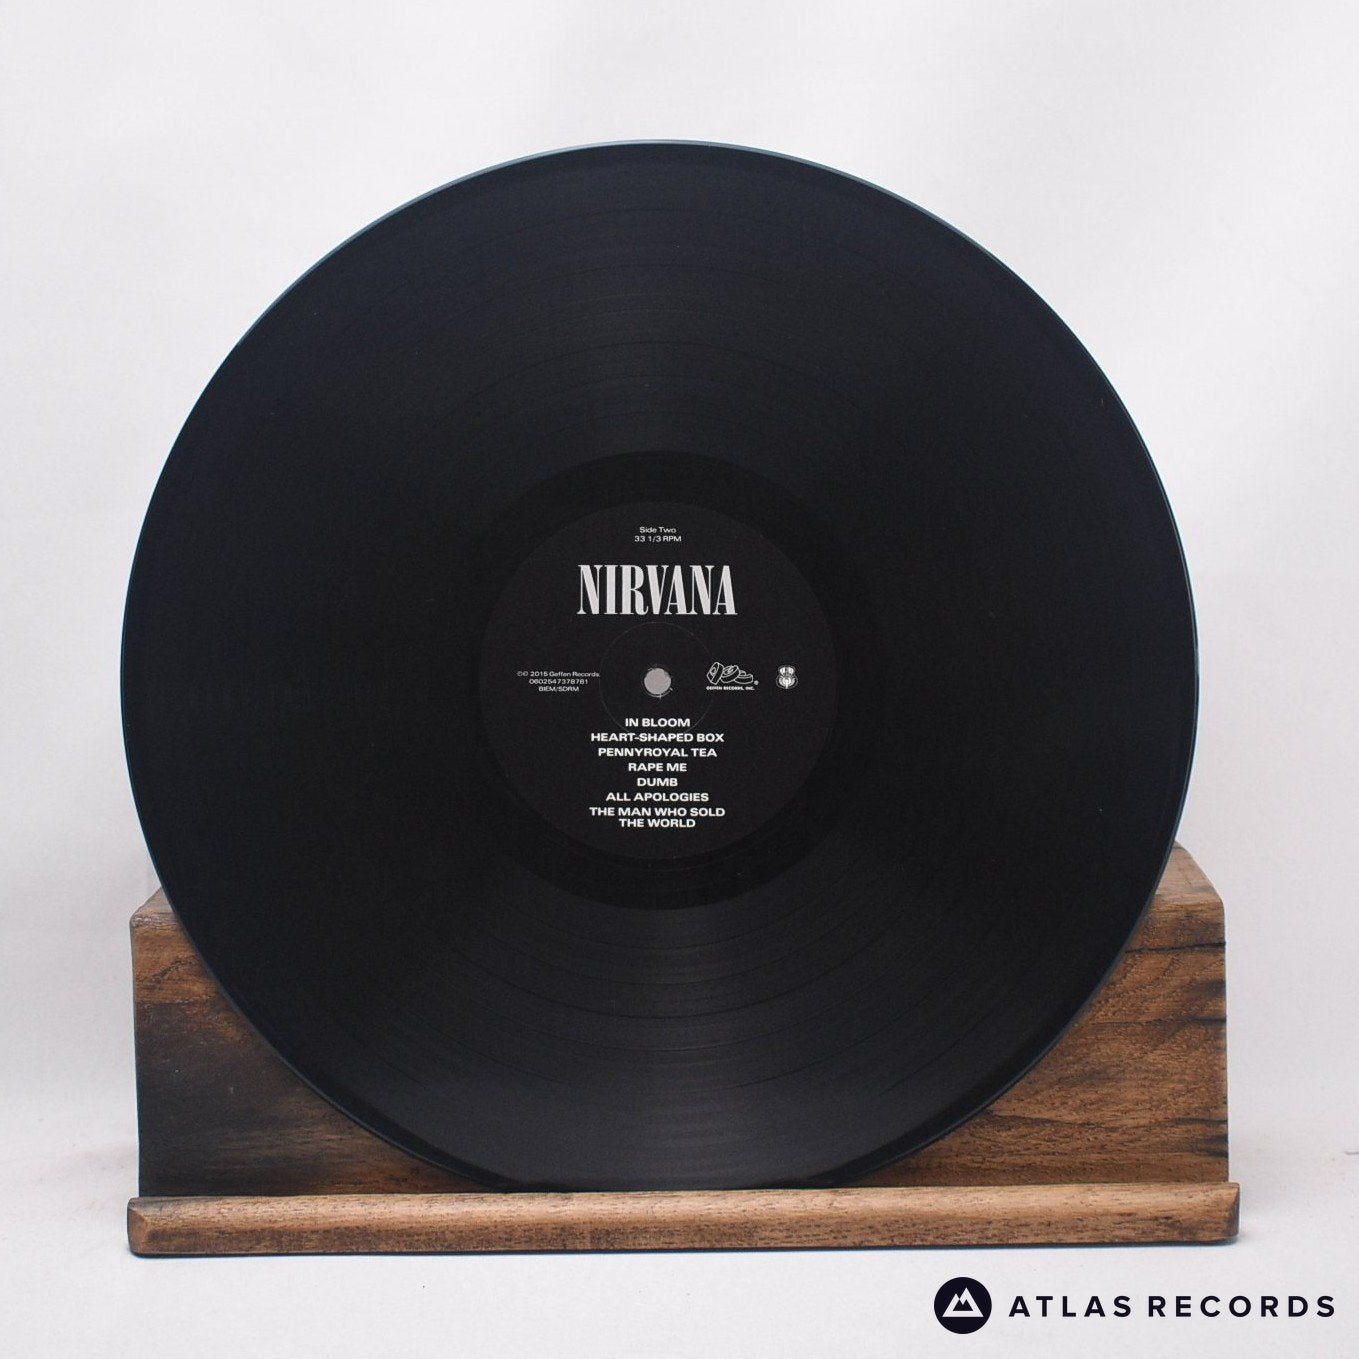 Nirvana Nirvana LP Vinyl Record EX/NM ‐ Atlas Records